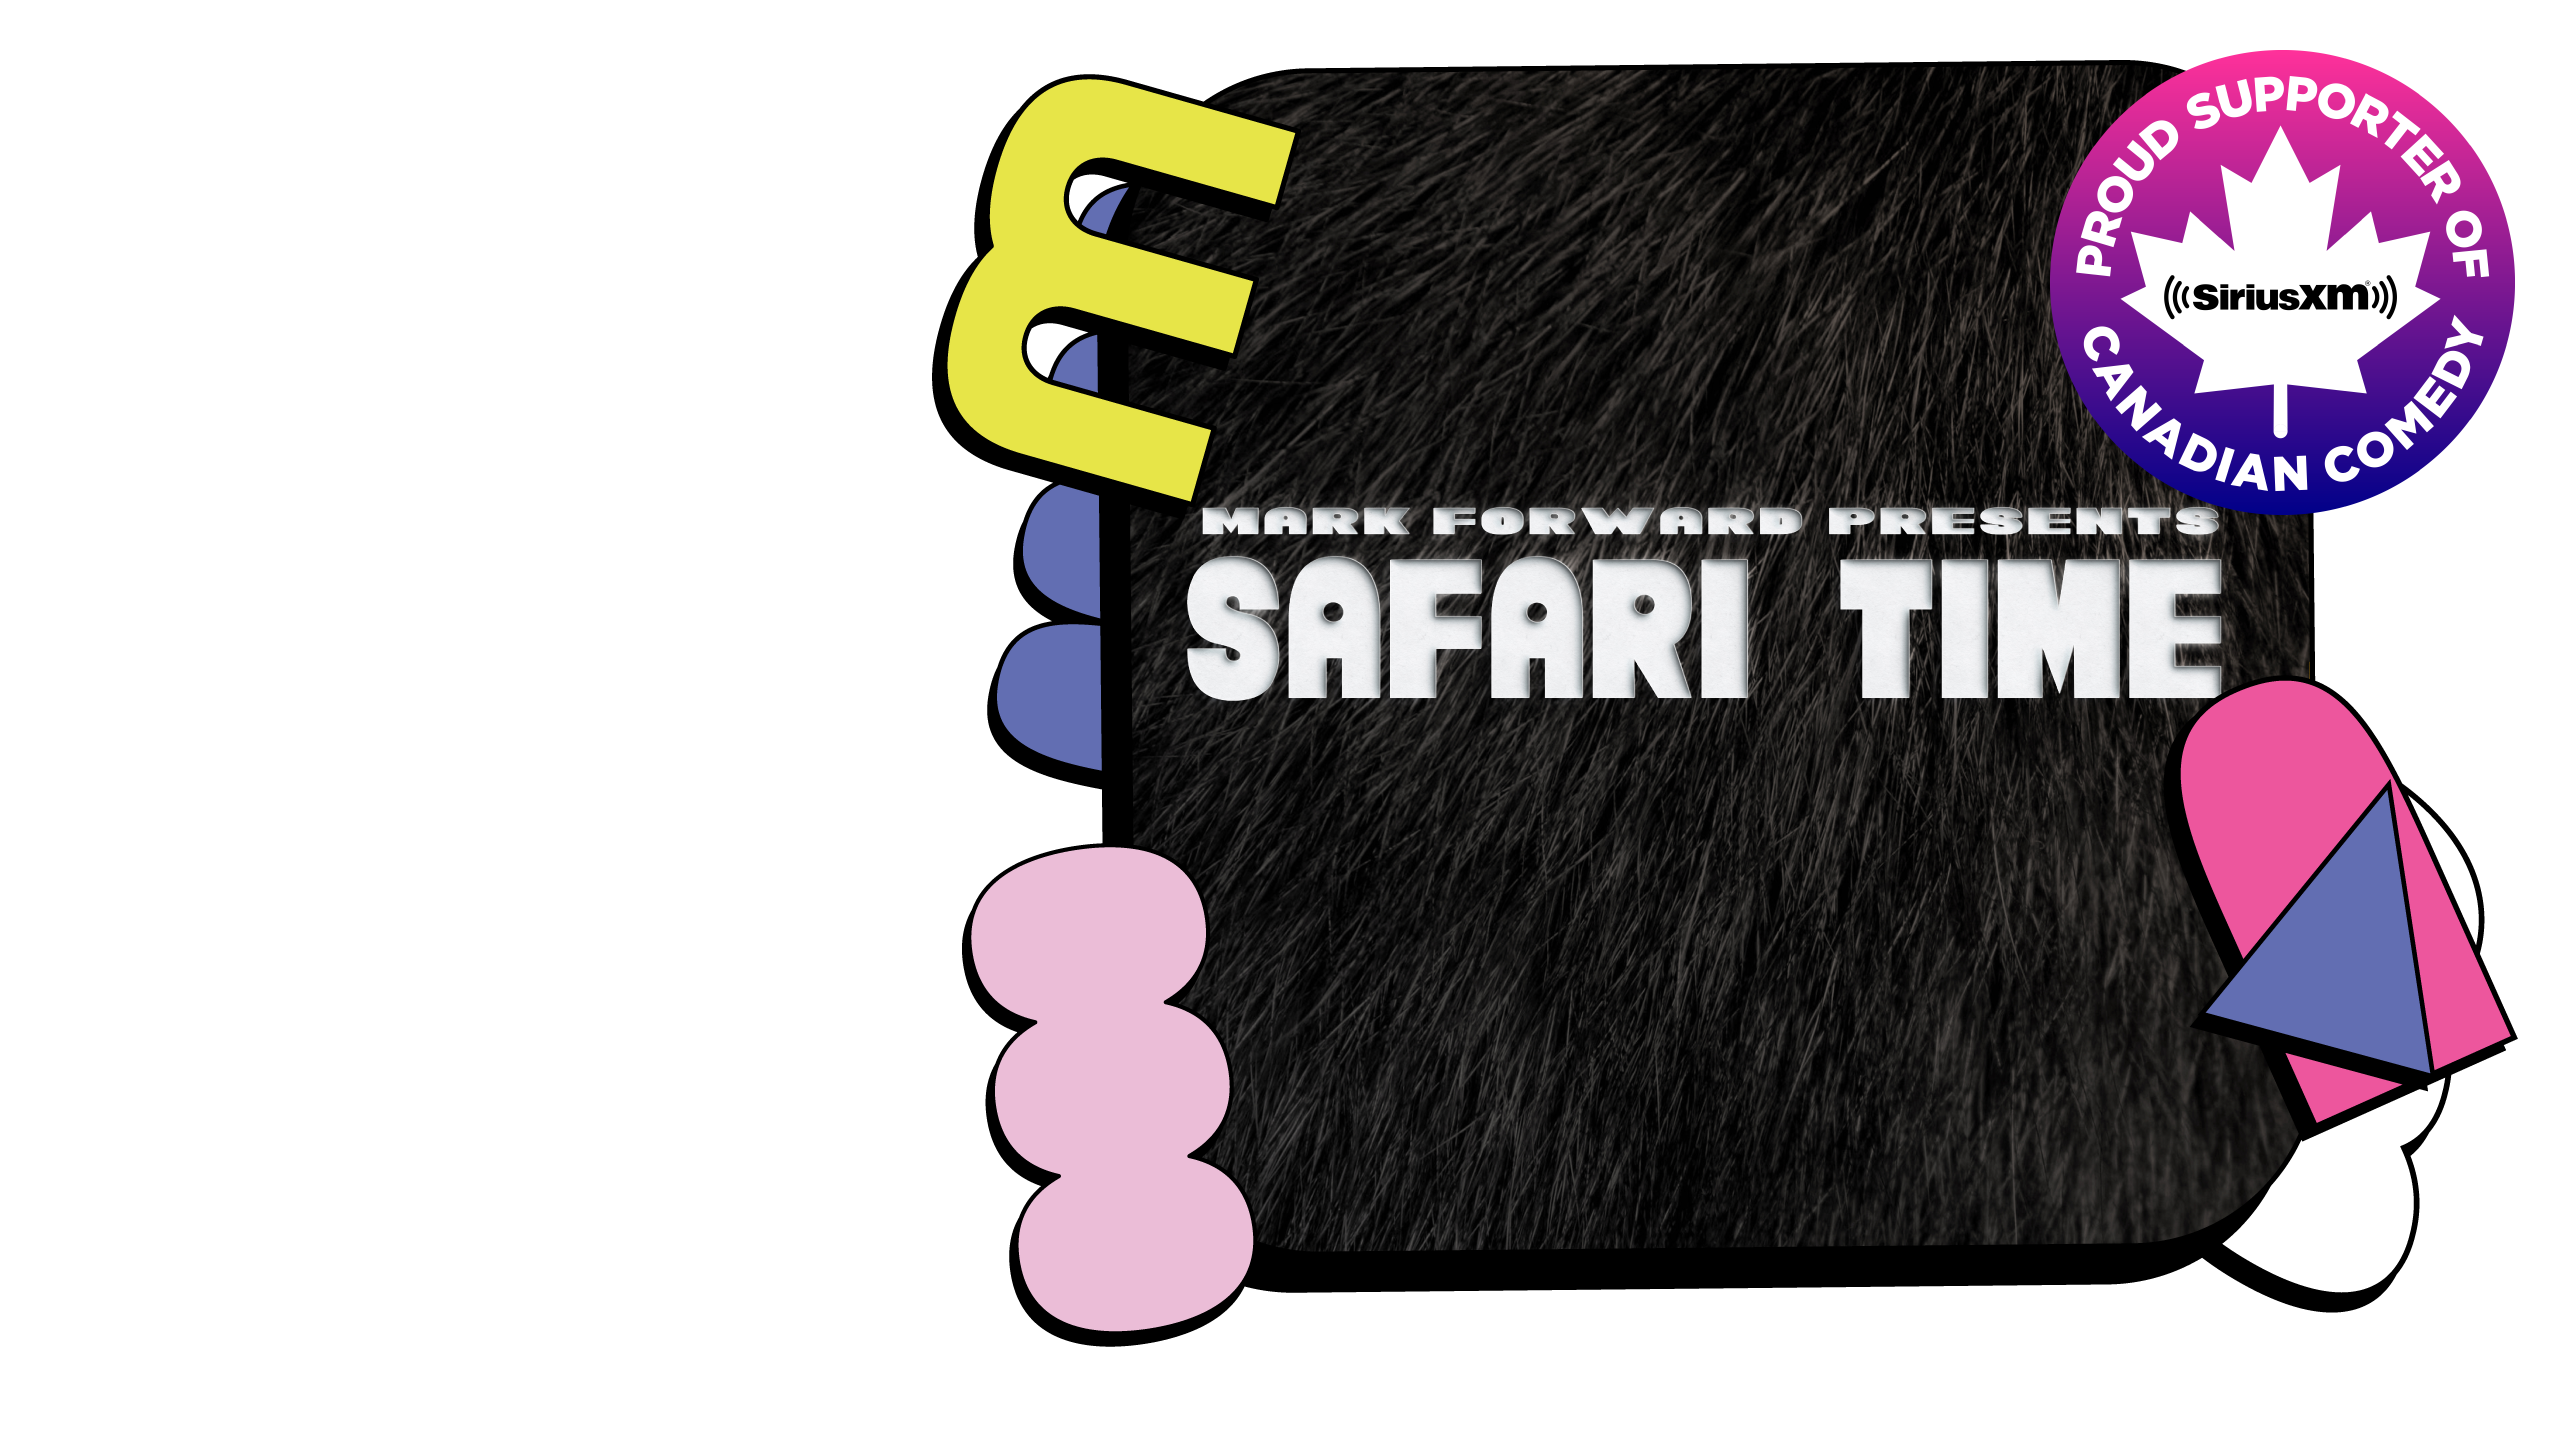 Promotional image for Mark Forward: Safari Time